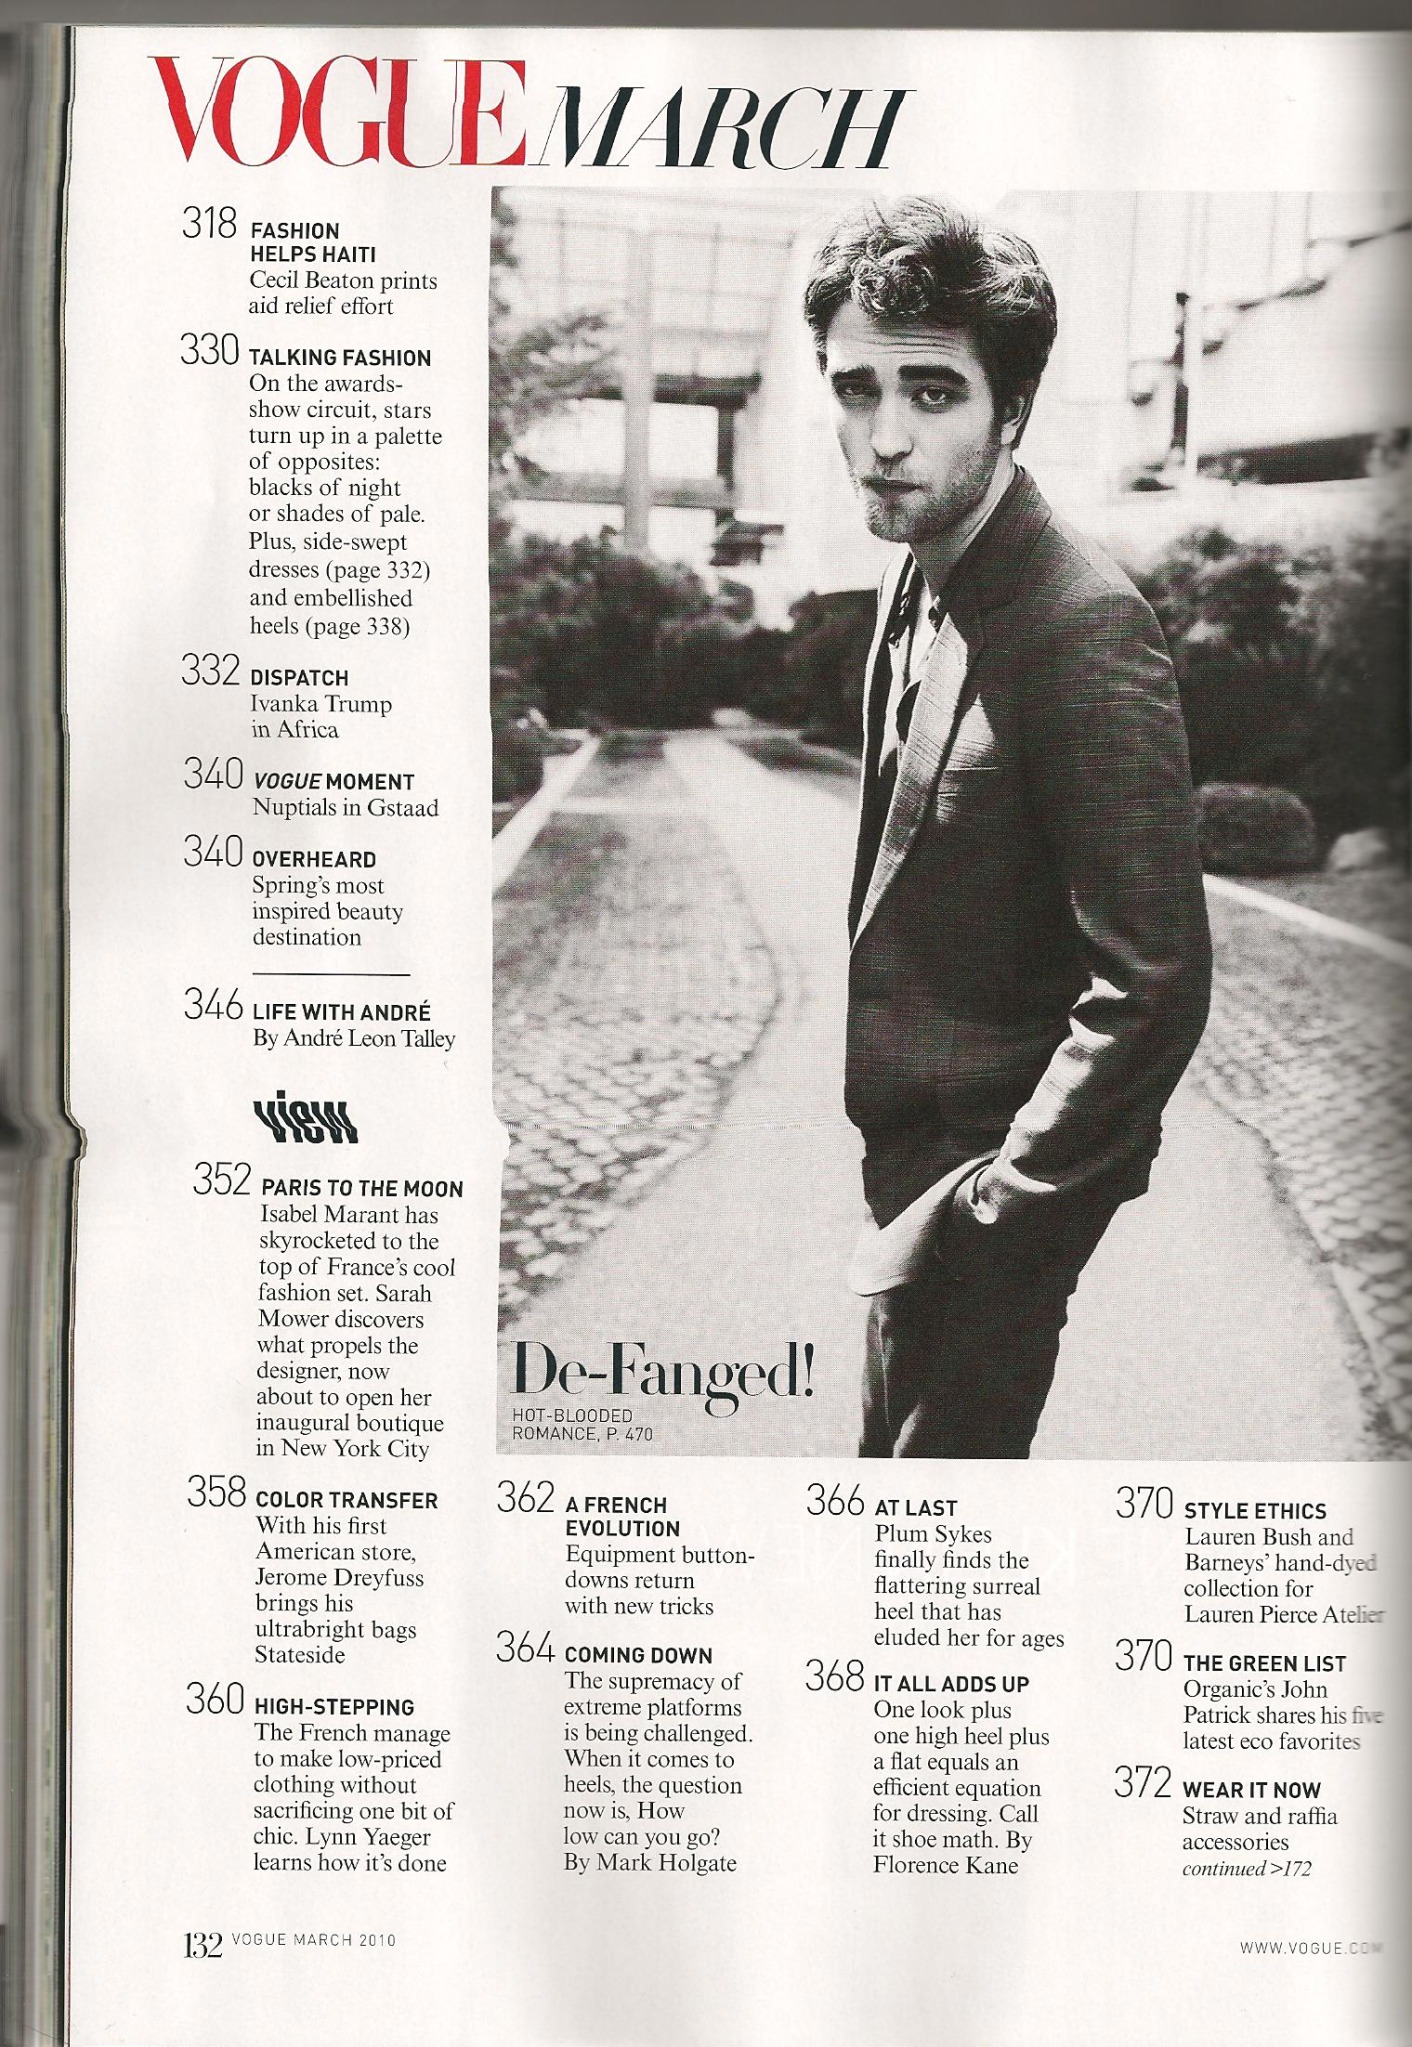 Robert Pattinson in Gorgeous New Vogue Magazine Photoshoot | twilightobsession4ever1412 x 2047